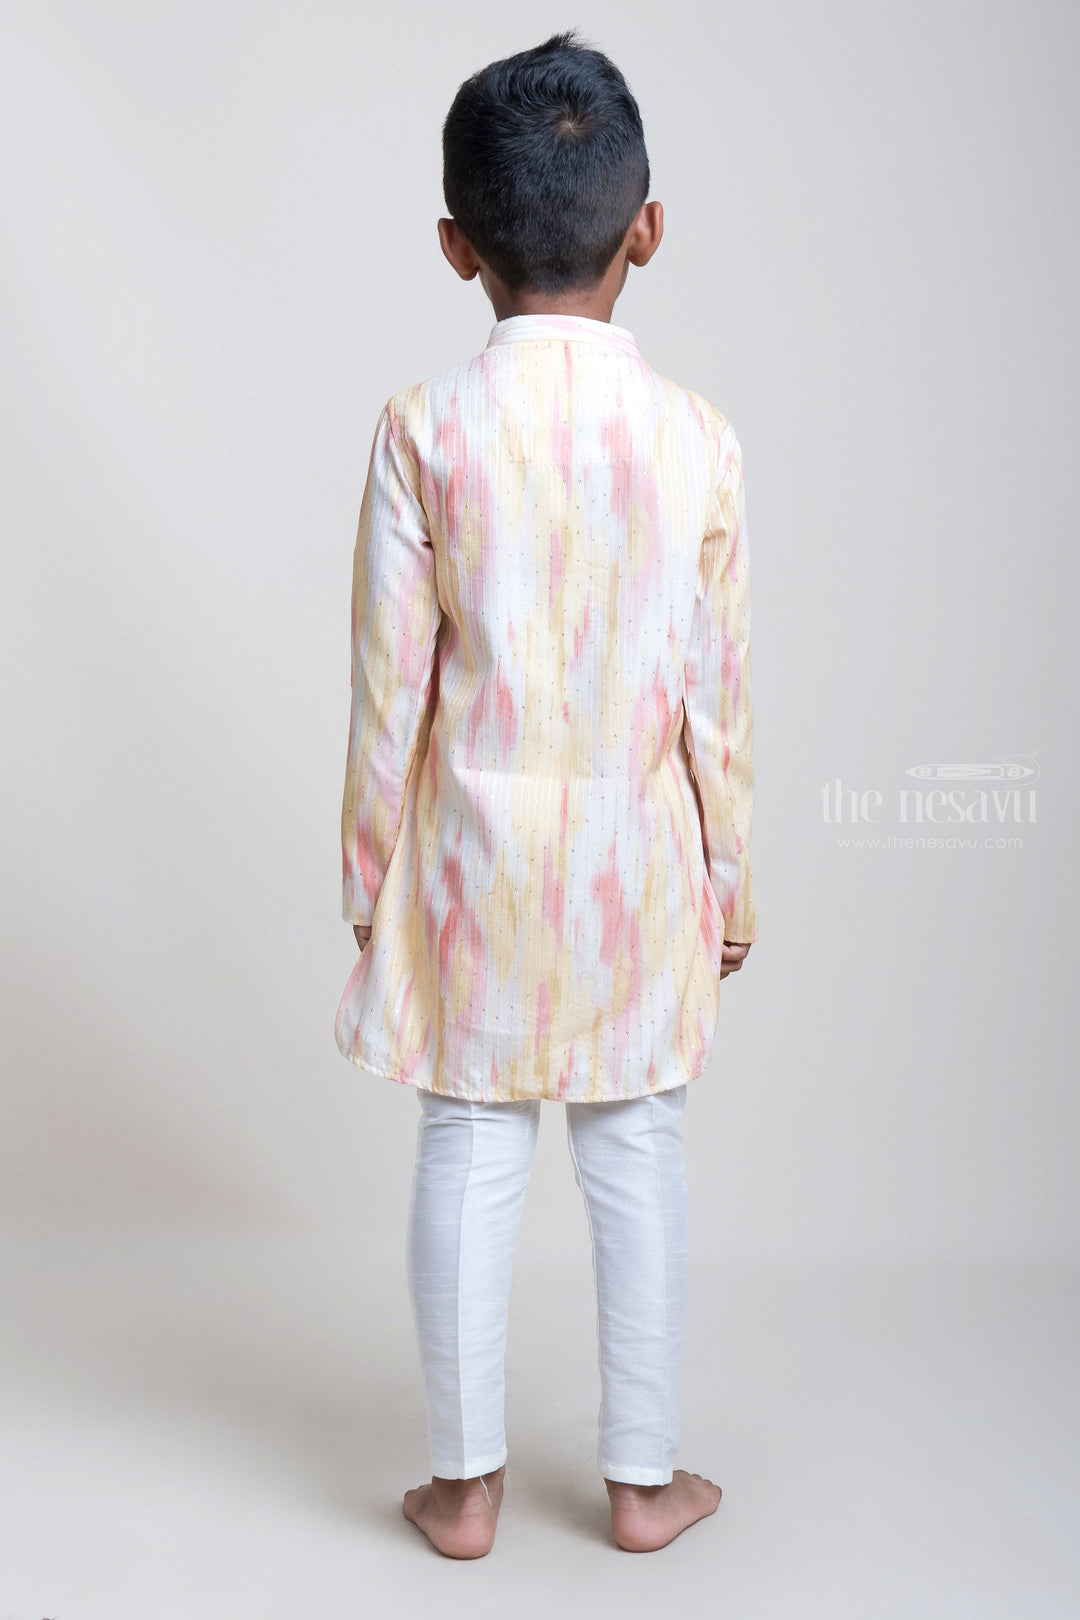 The Nesavu Boys Kurtha Set Yellow And Pink Shaded Embellished Cotton Kurta With White Pant For Boys psr silks Nesavu